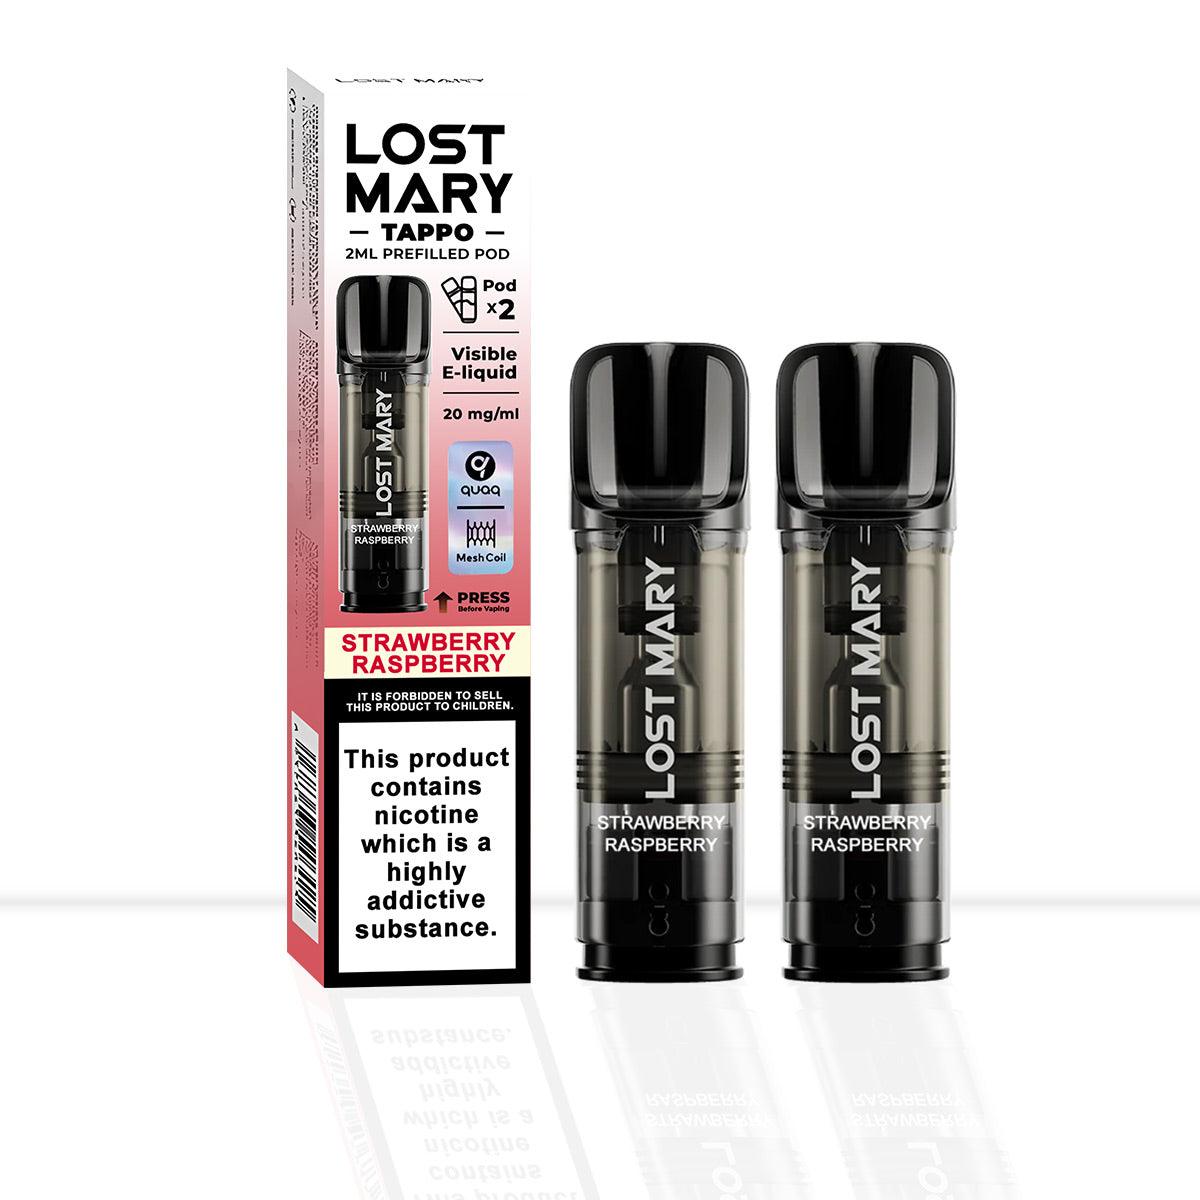 Lost Mary Tappo Strawberry Raspberry Vape Pods - Pod & Refills